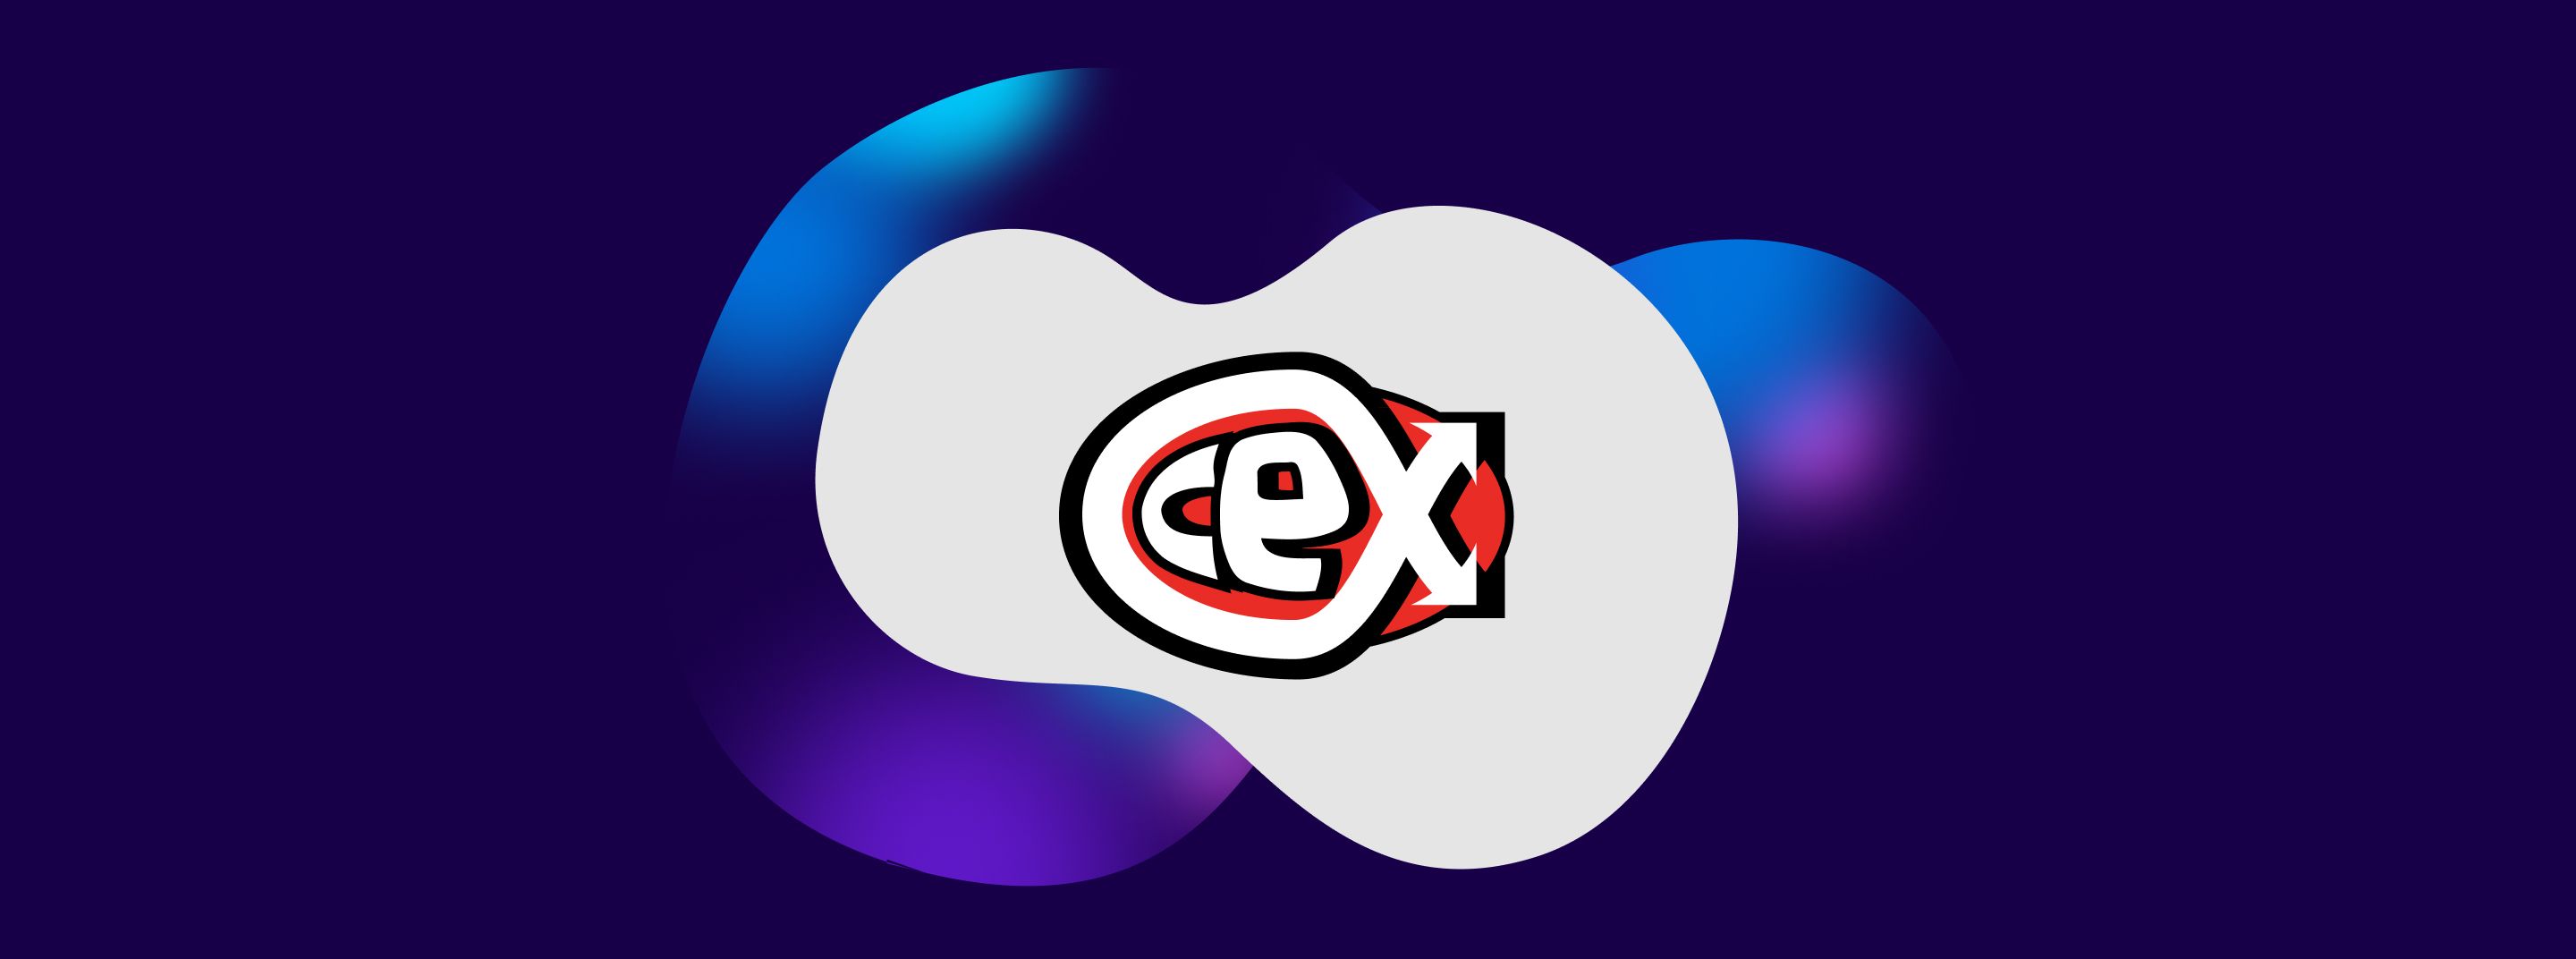 CEX logo on blue background